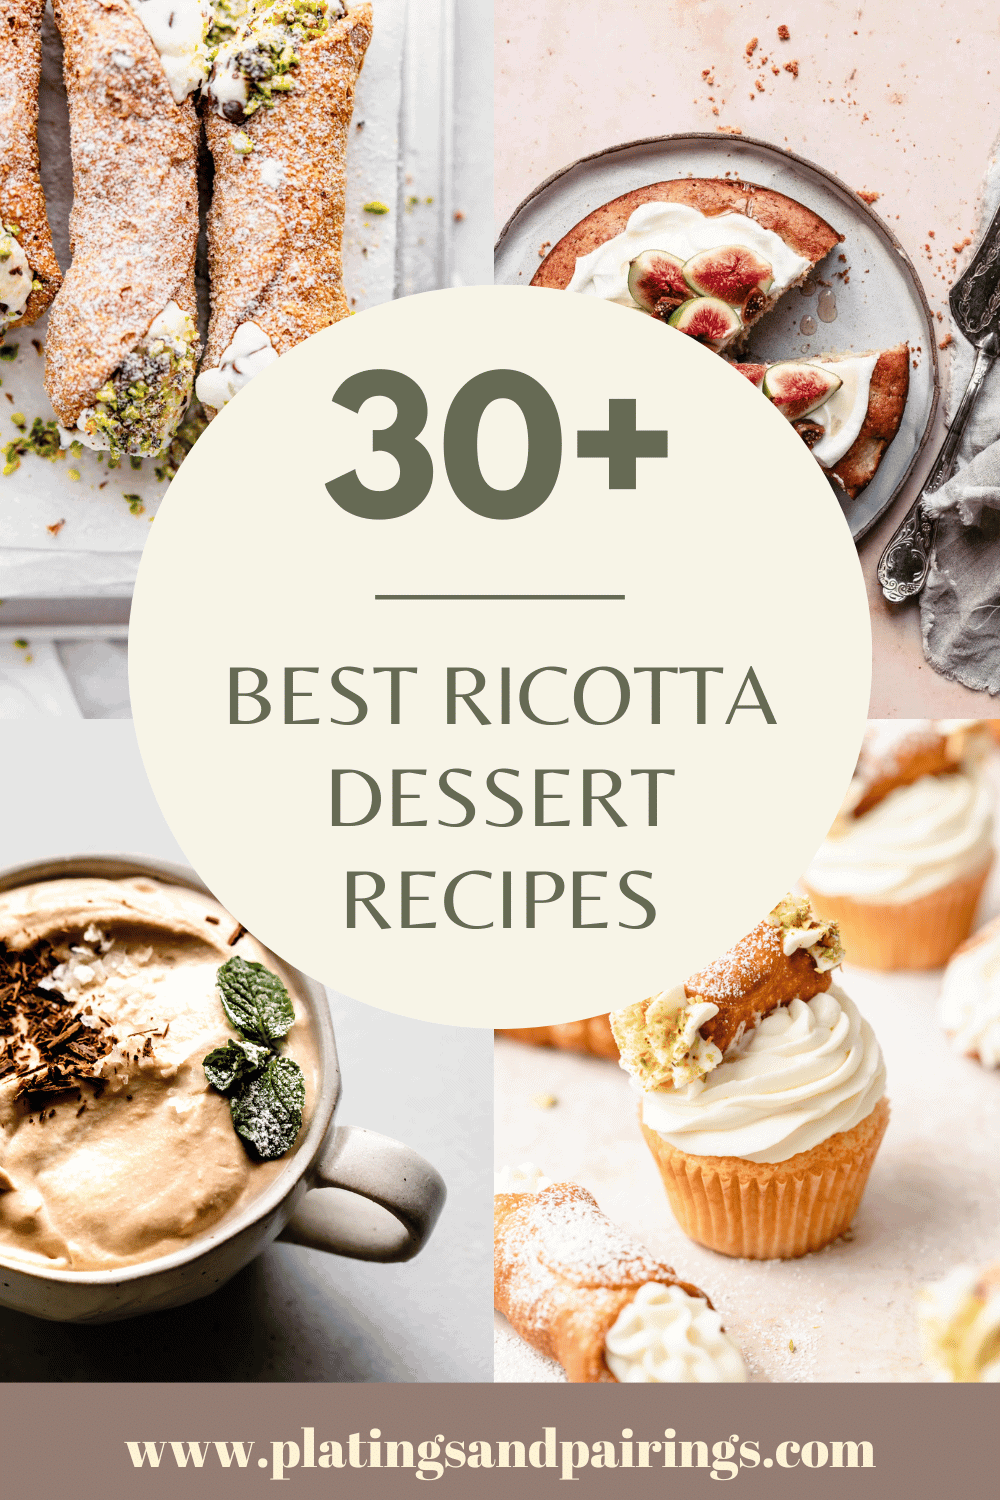 35 Healthy Instant Pot Recipes (Quick & Easy) - Kristine's Kitchen